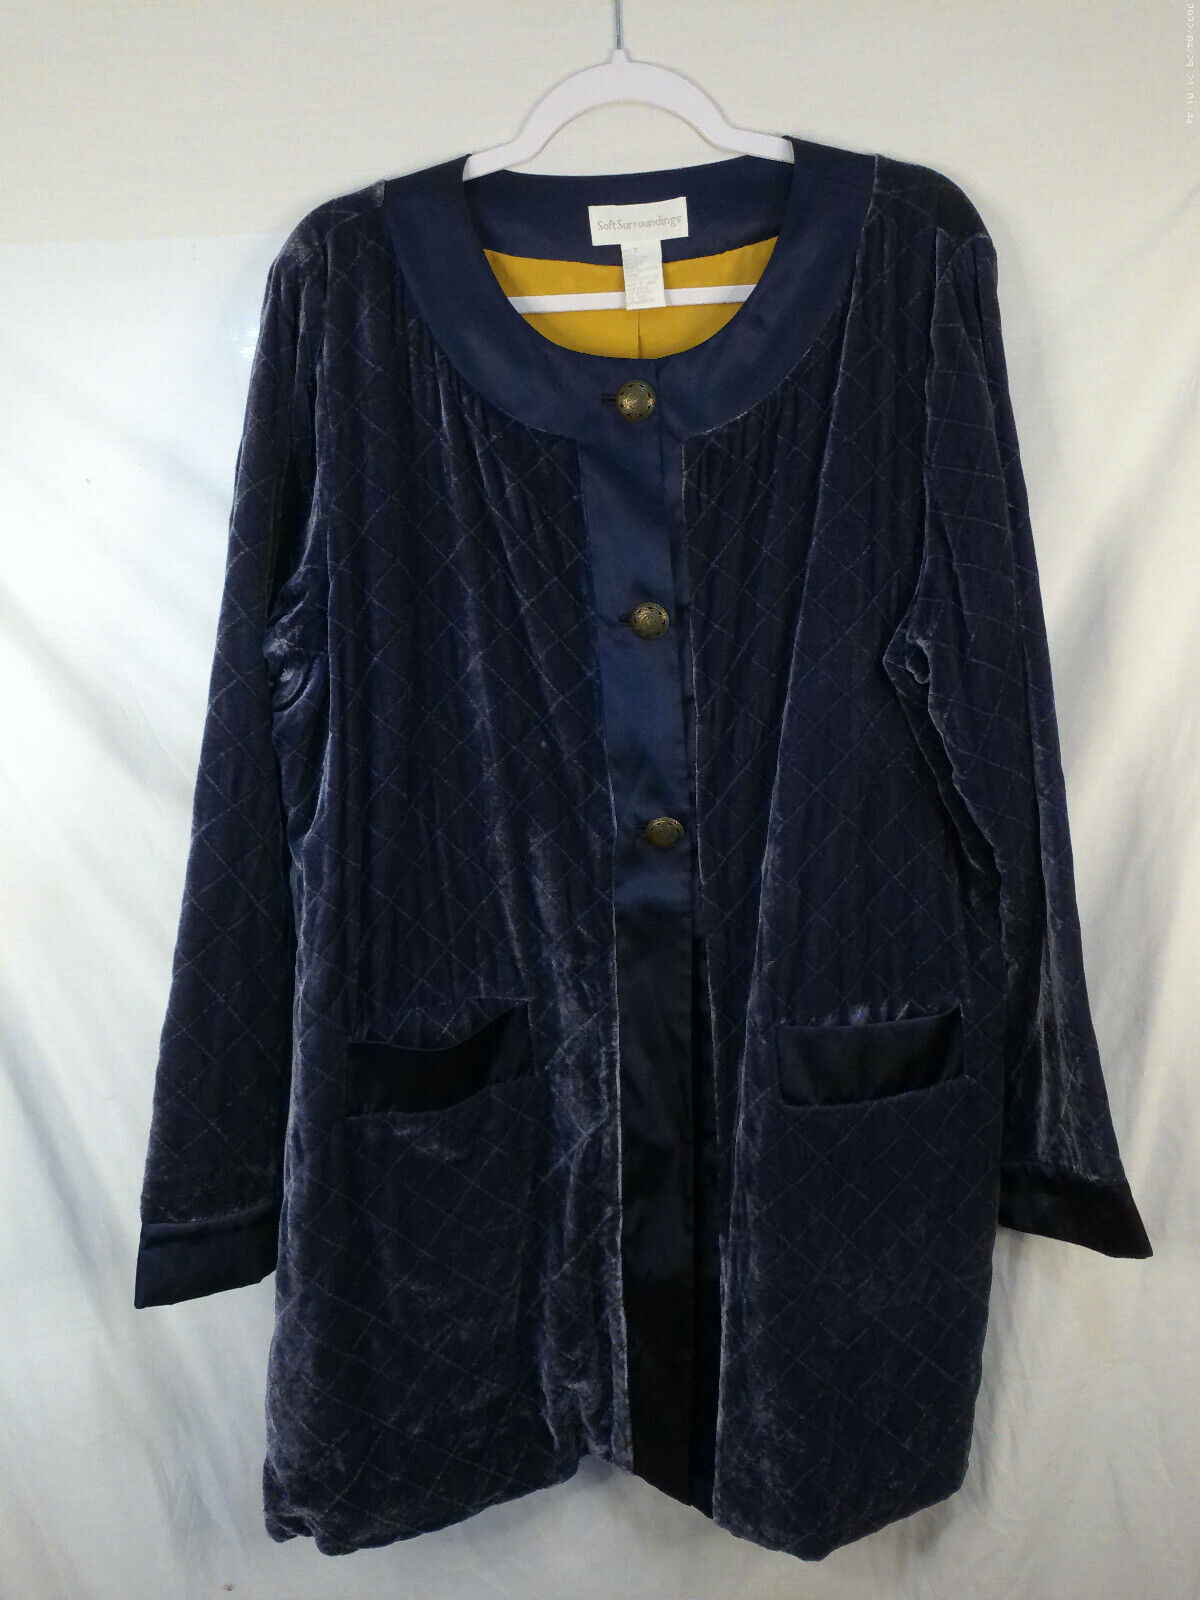 Soft Surroundings XL Silk Rayon Blue Velvet Jacket - image 1